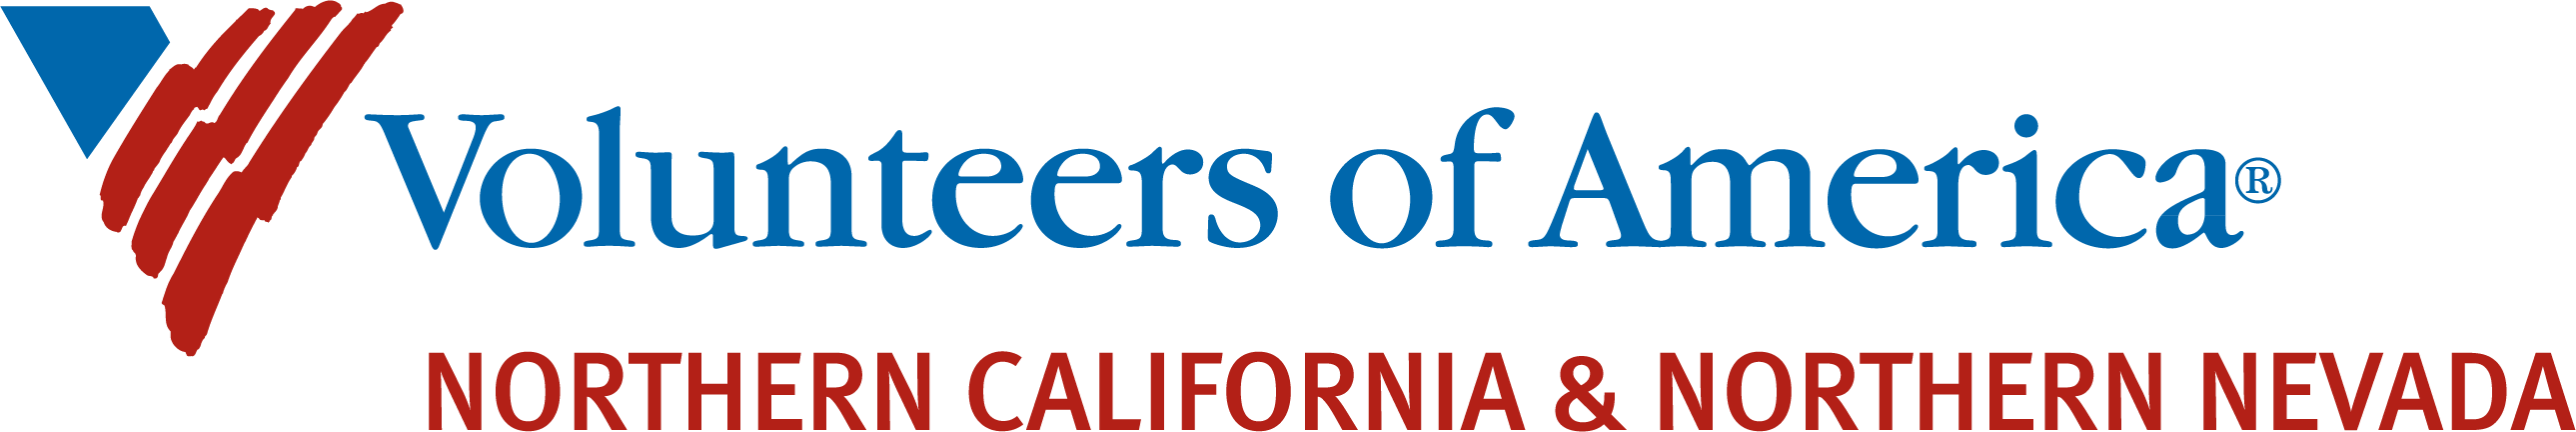 Volunteers of America Northern California & Northern Nevada | Logo